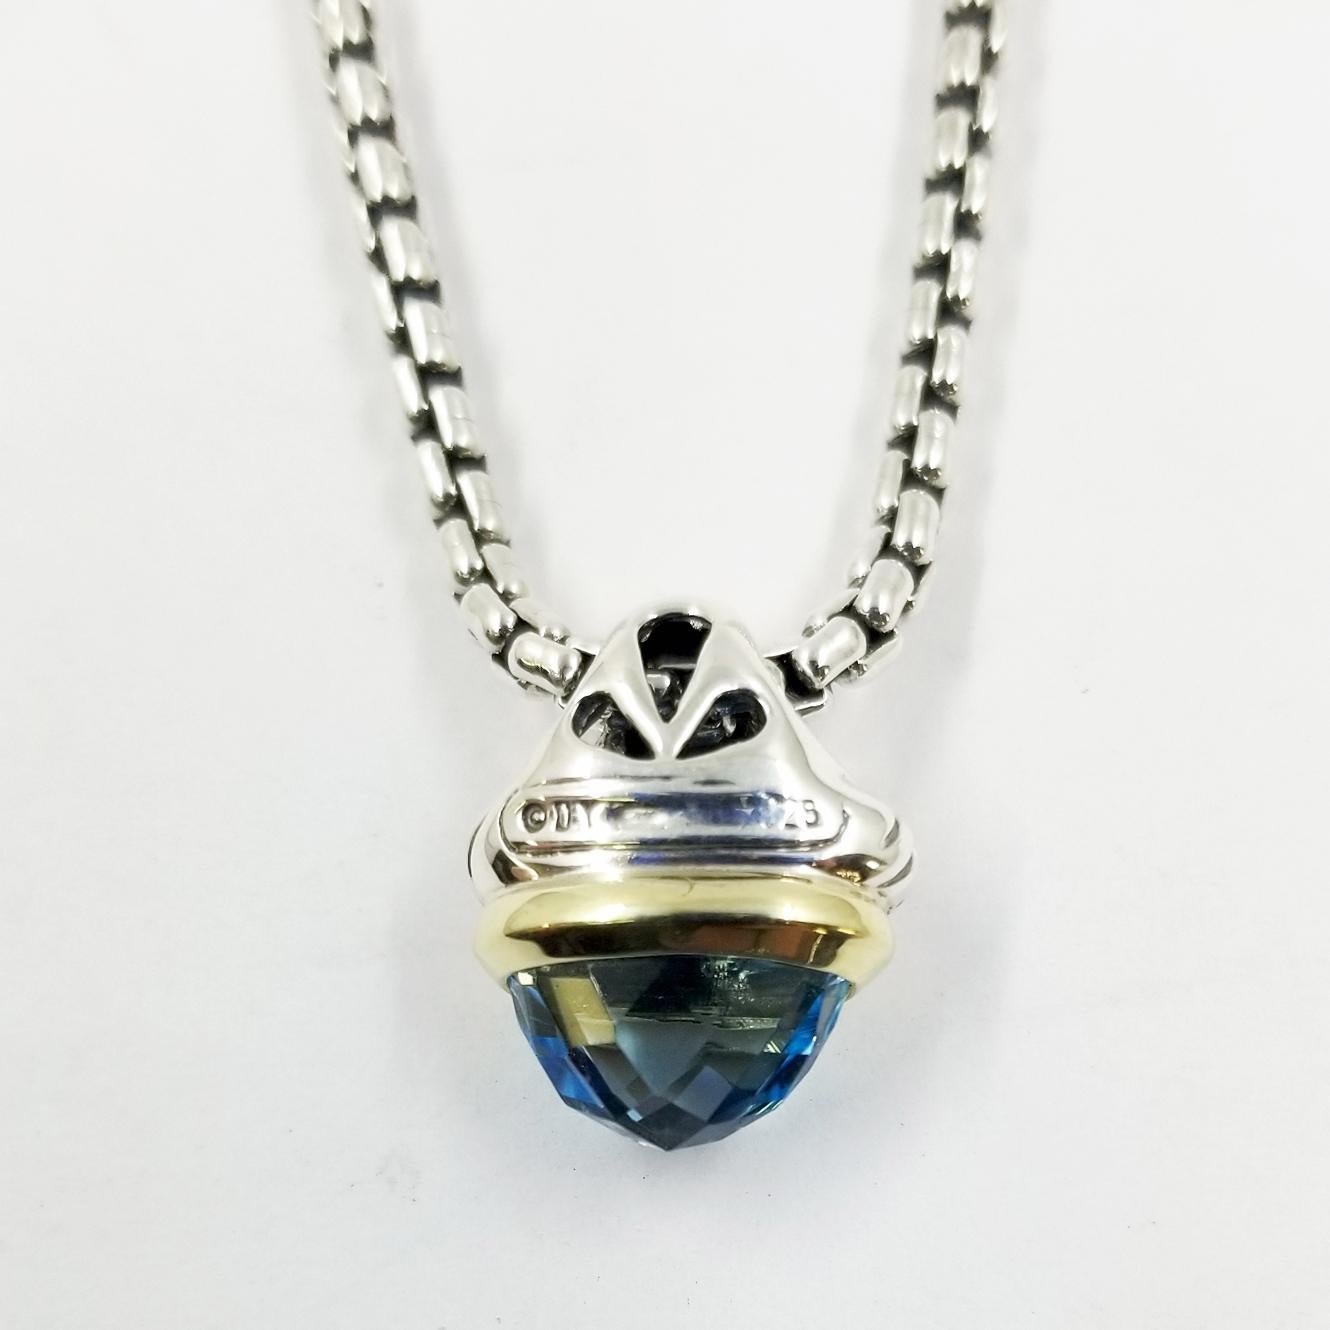 Briolette Cut David Yurman Blue Topaz Pendant Necklace